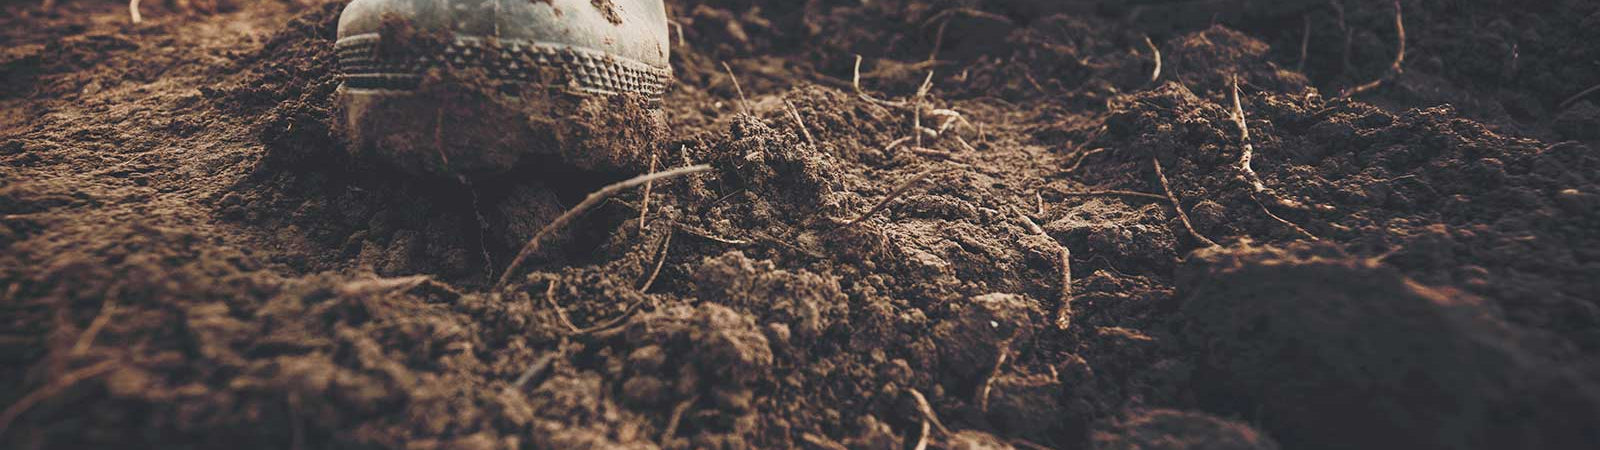 Soil-Borne Disease & Human Health